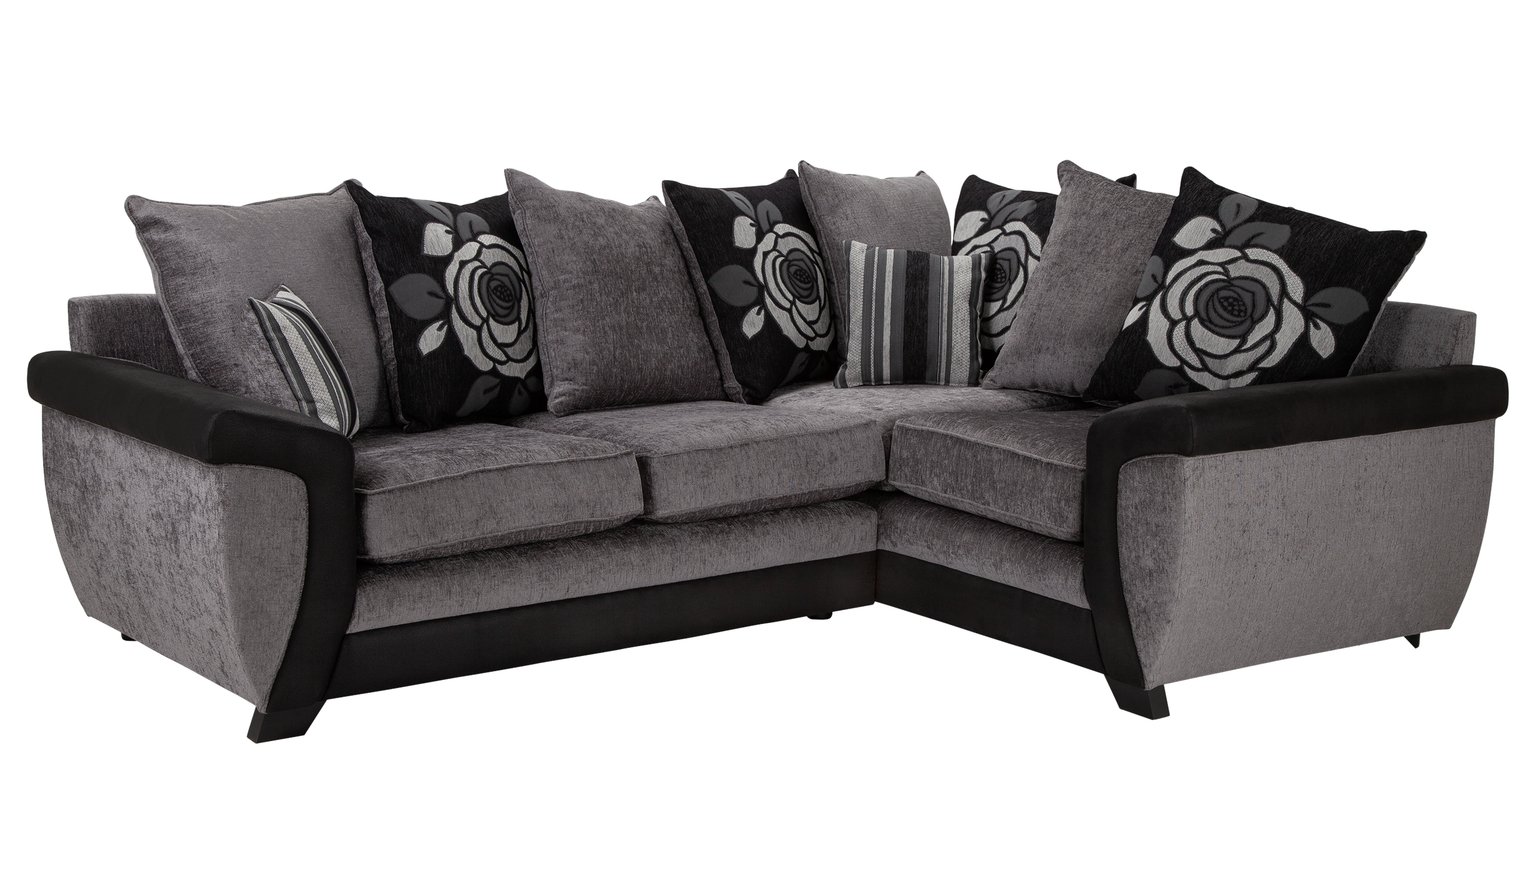 Argos Home Illusion Right Corner Fabric Sofa Review